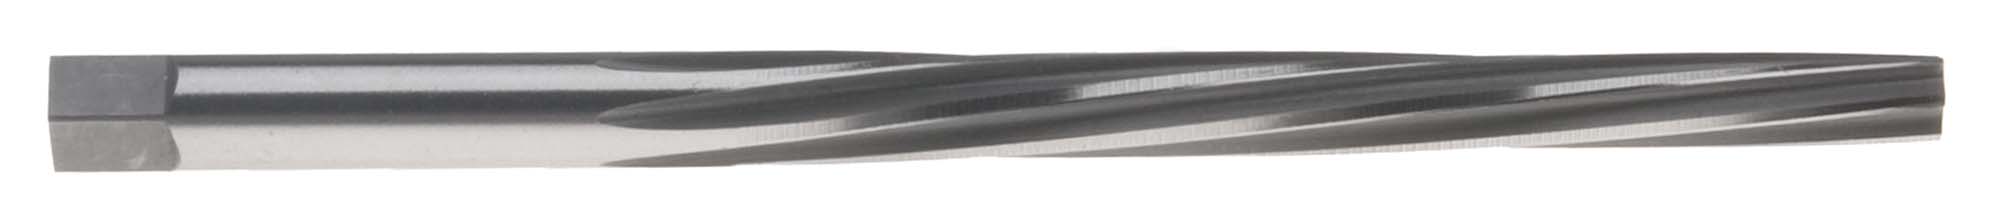 #1 Spiral Flute Taper Pin Reamer, High Speed Steel